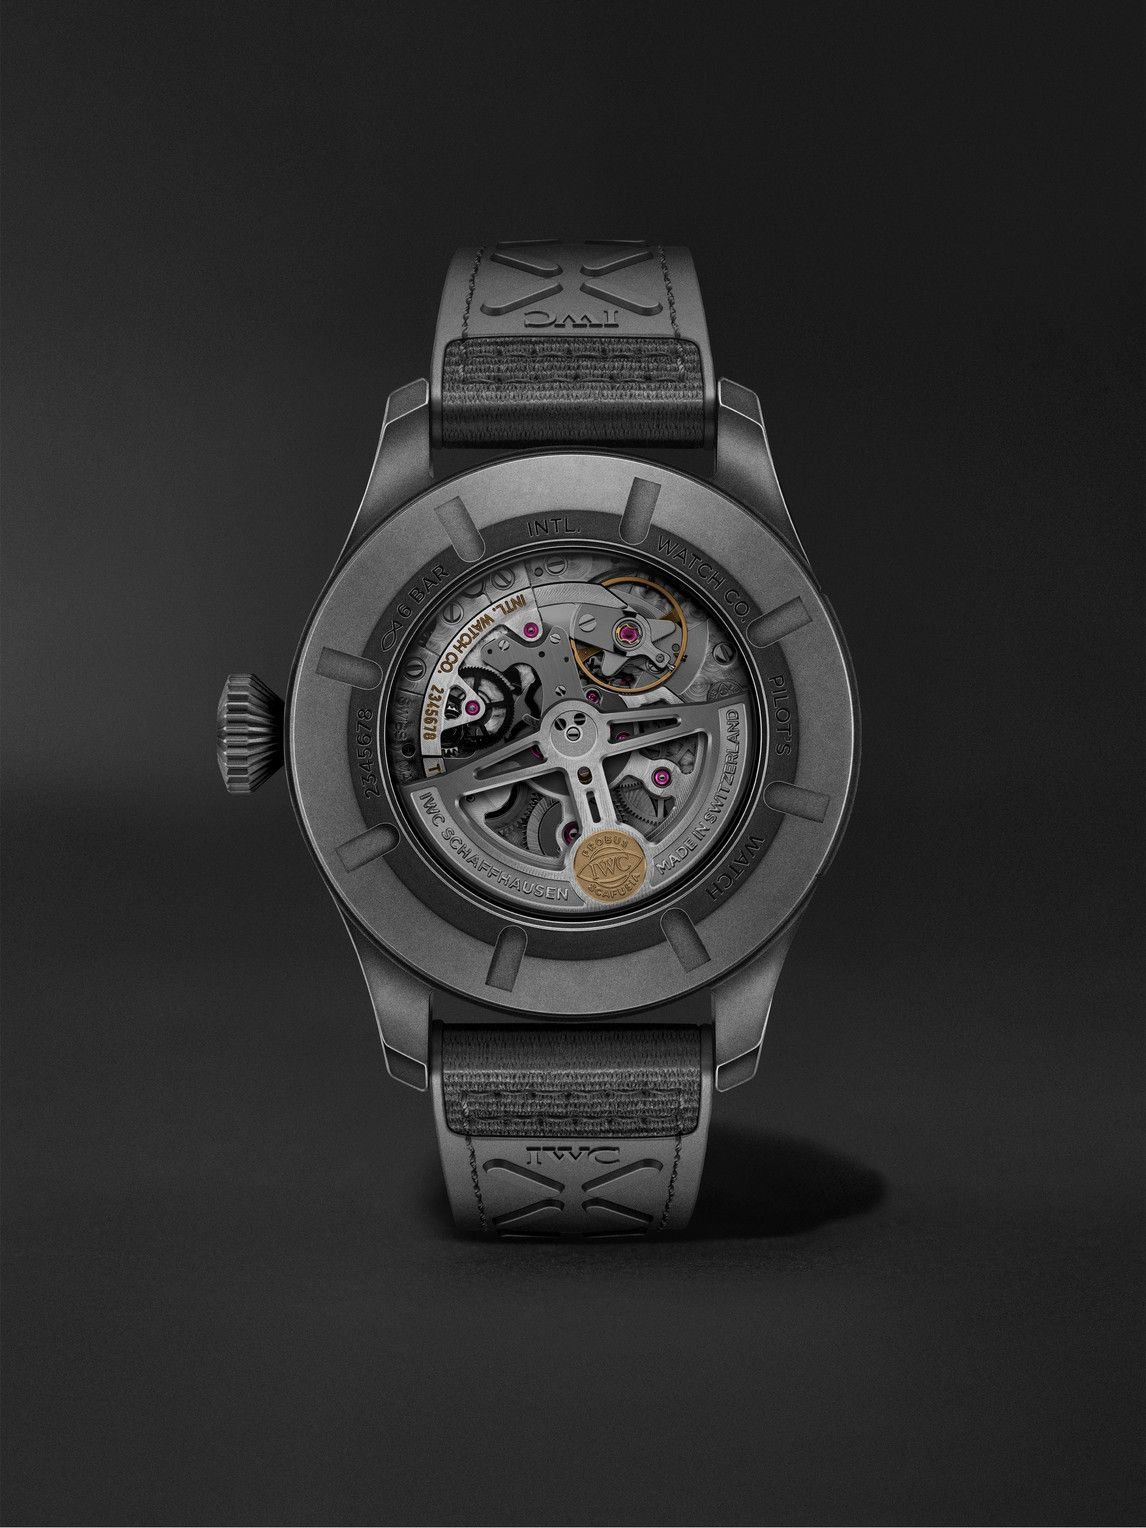 IWC Schaffhausen - Pilot's Watch Timezoner TOP GUN Limited Edition Automatic Ceratanium and Webbing Watch, Ref. No. IW395505